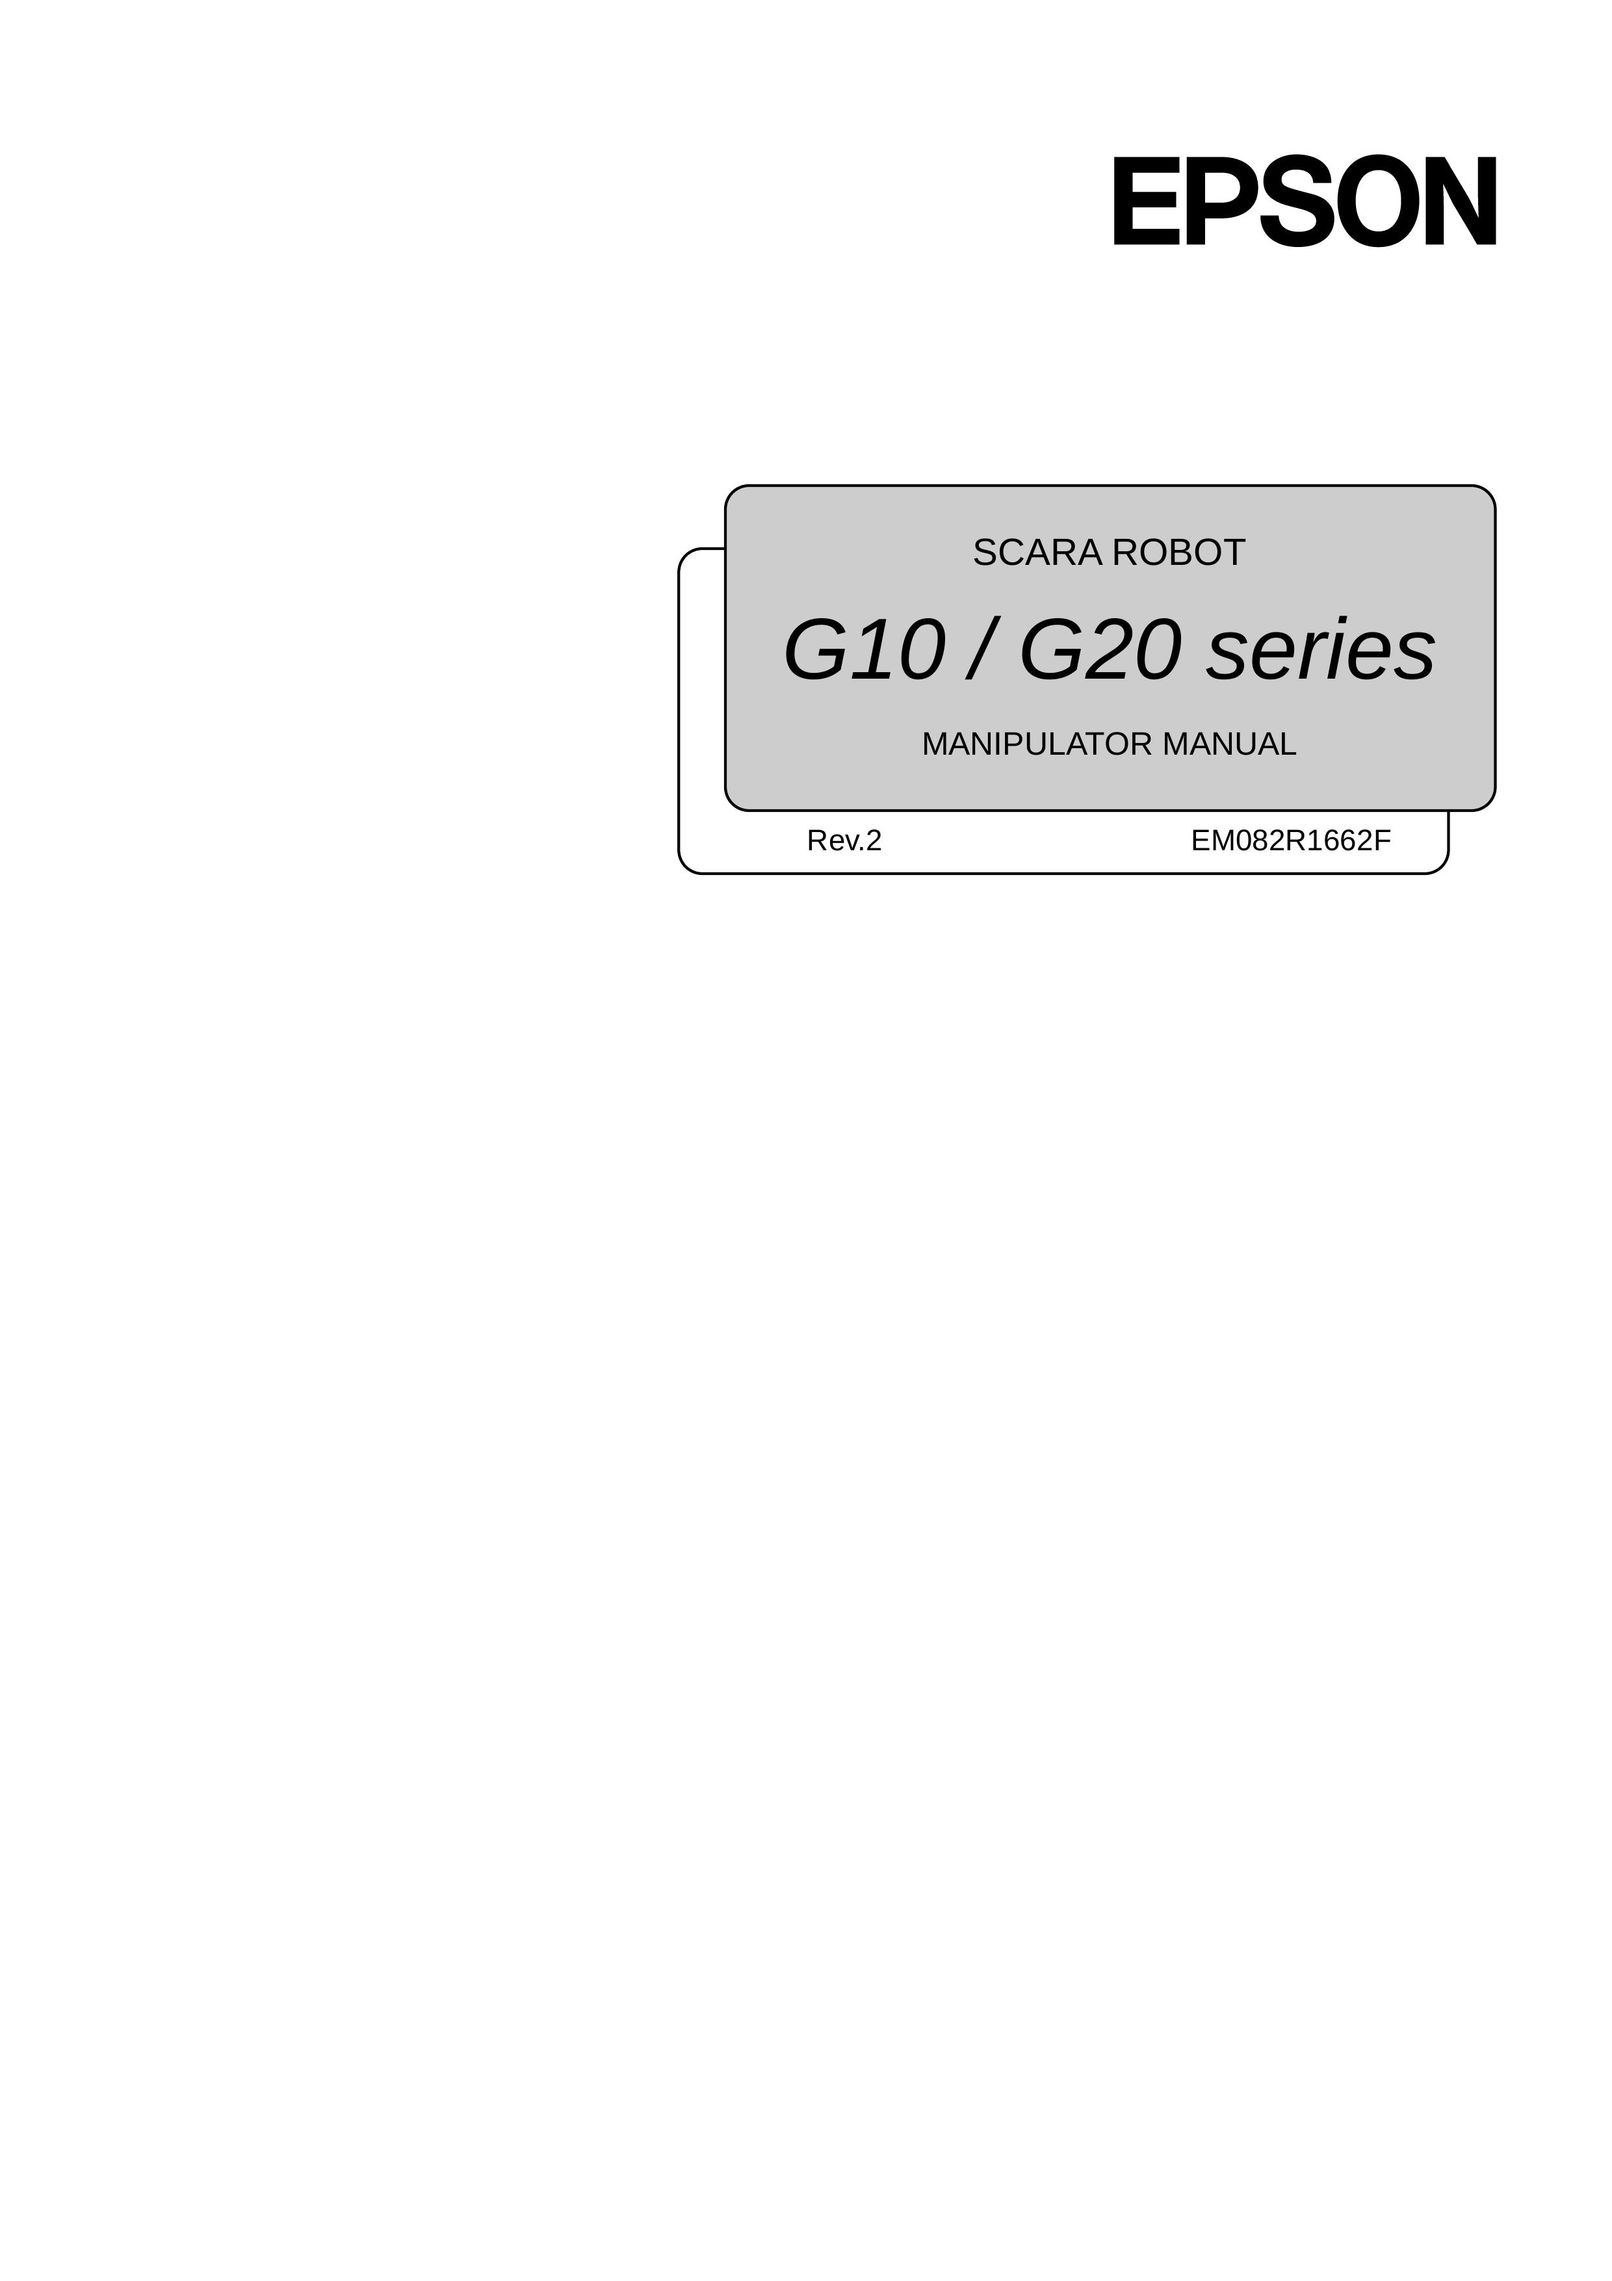 Epson G10 Series Robotics User Manual